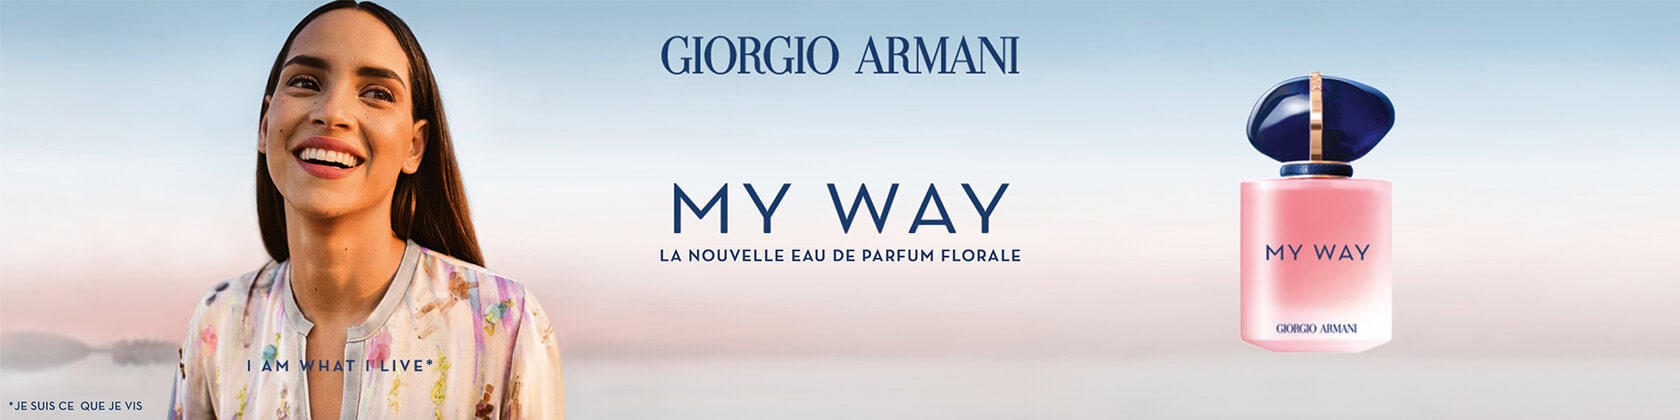 Armani My Way Floral